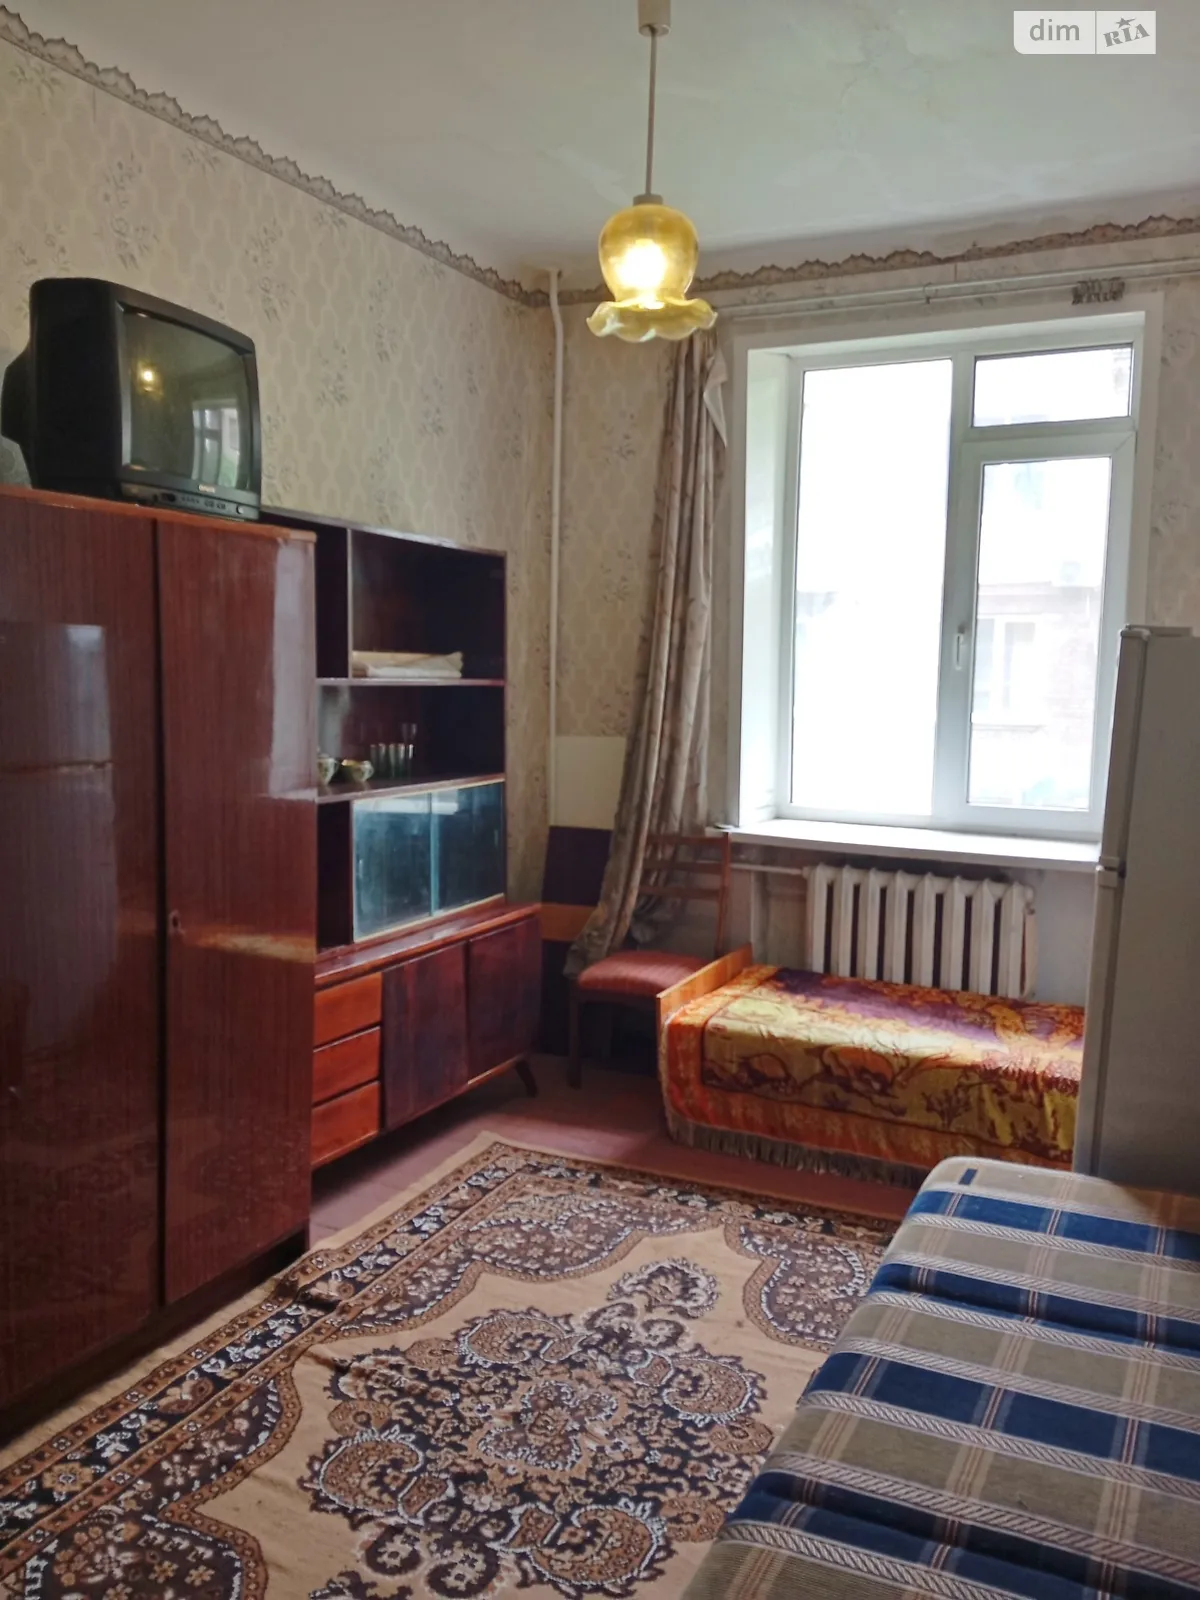 Продается комната 21 кв. м в Запорожье, цена: 3900 $ - фото 1